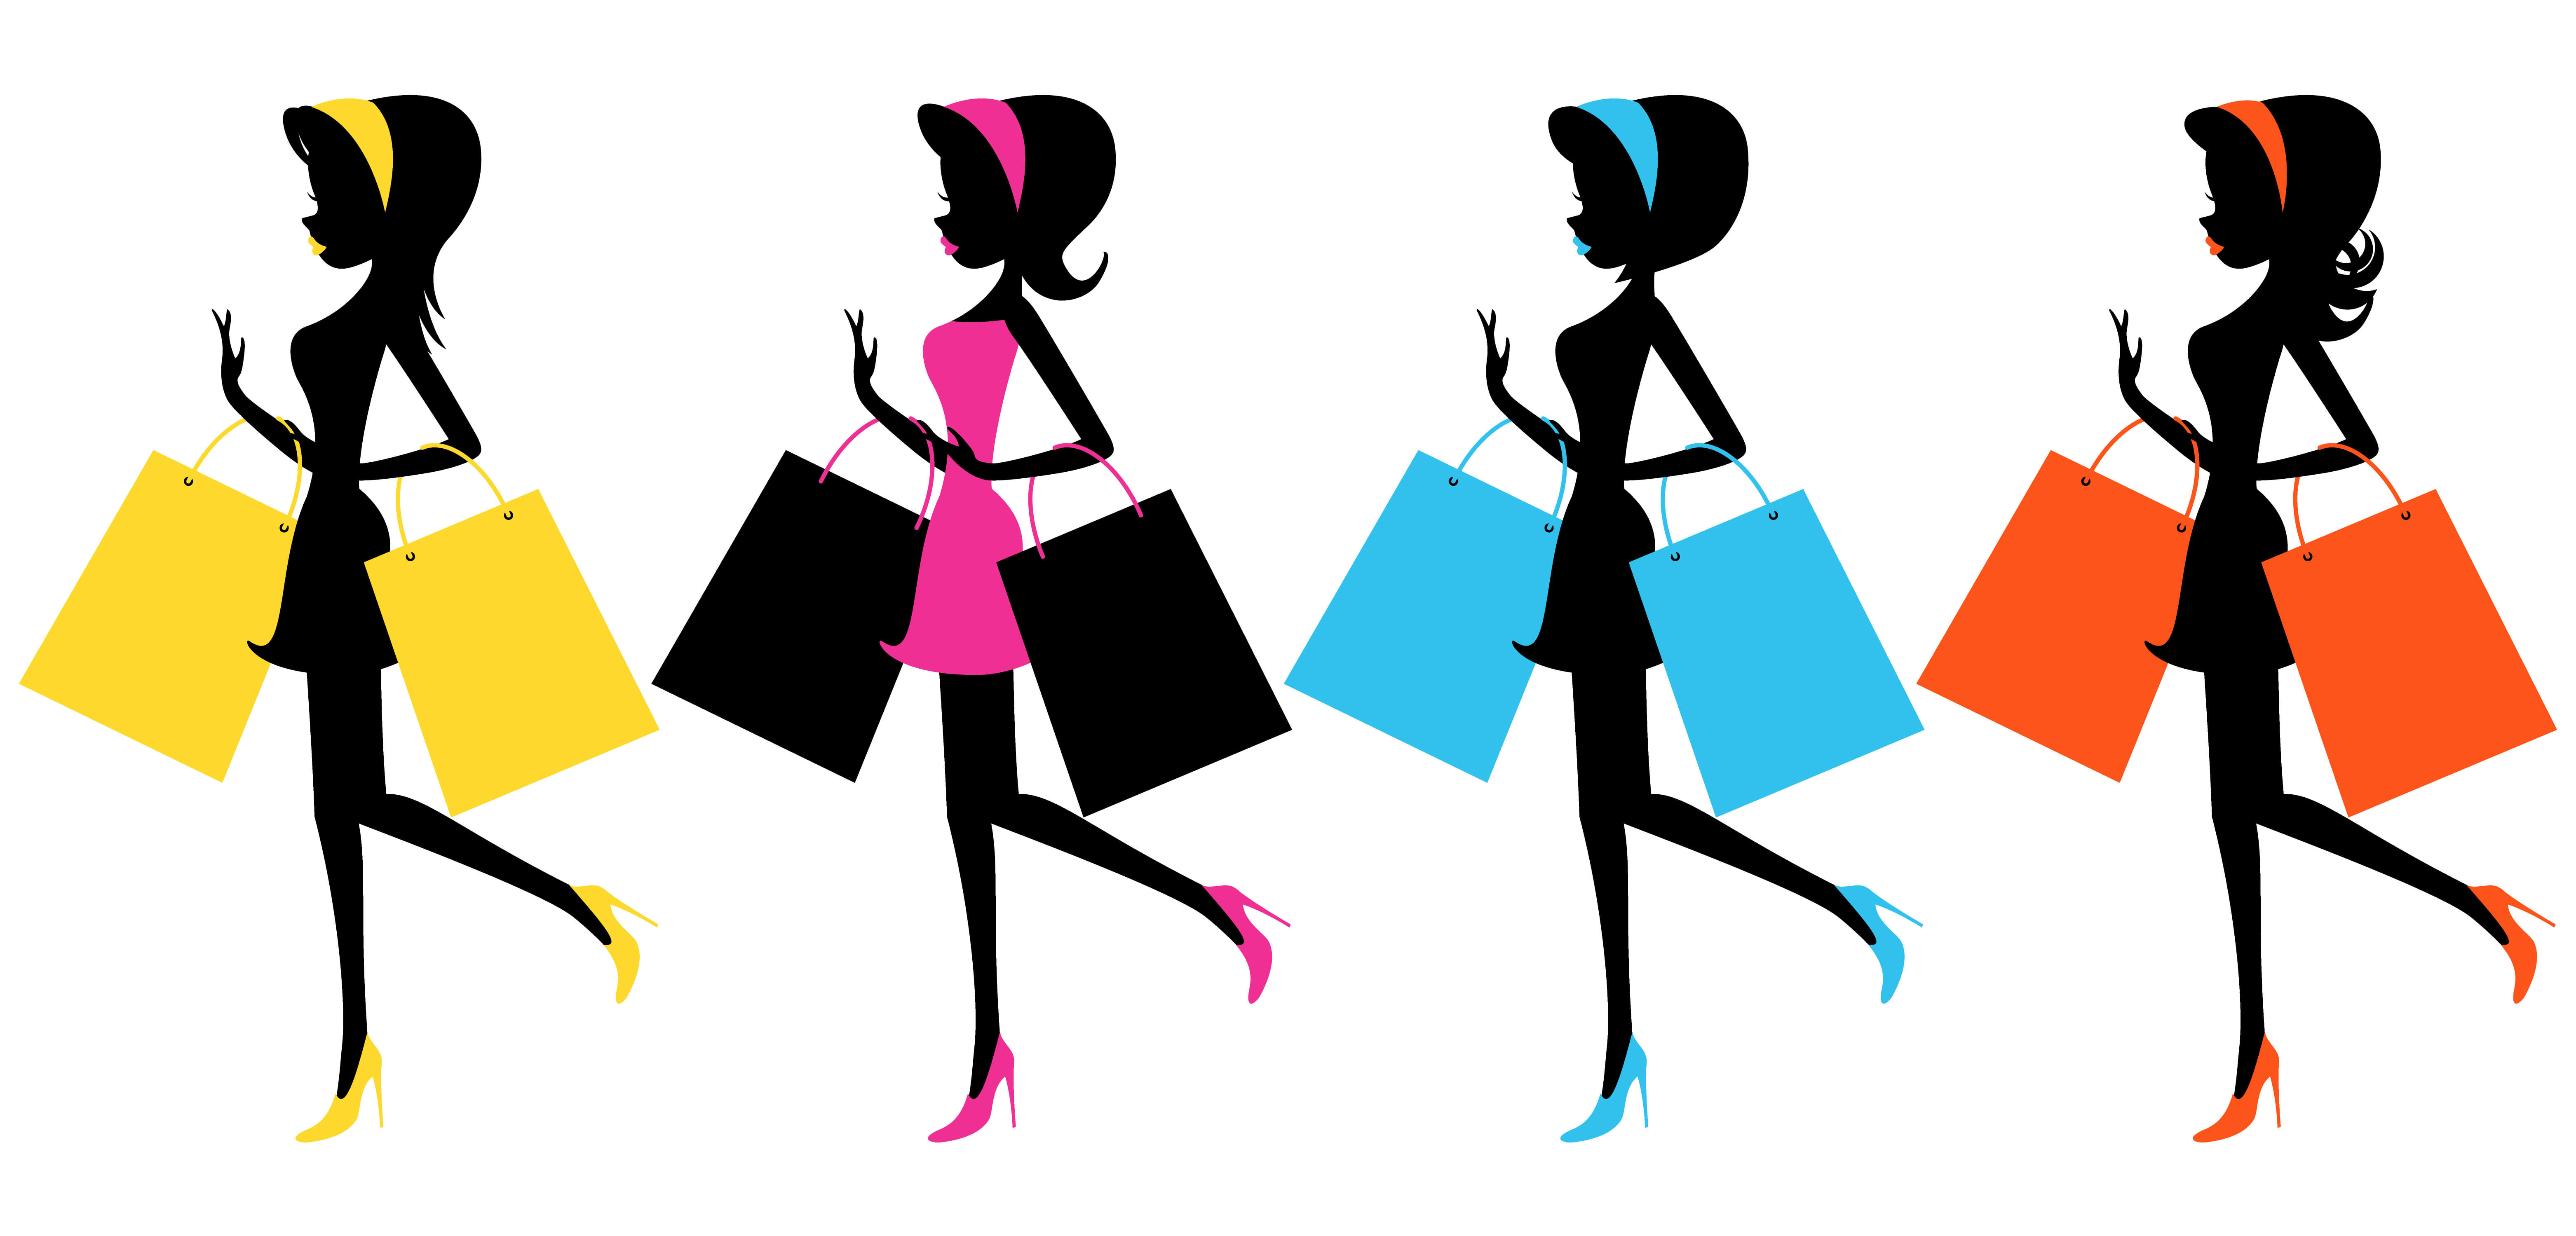 Shopping Sales In Toronto (2014) - Toronto City Gossip - Toronto City